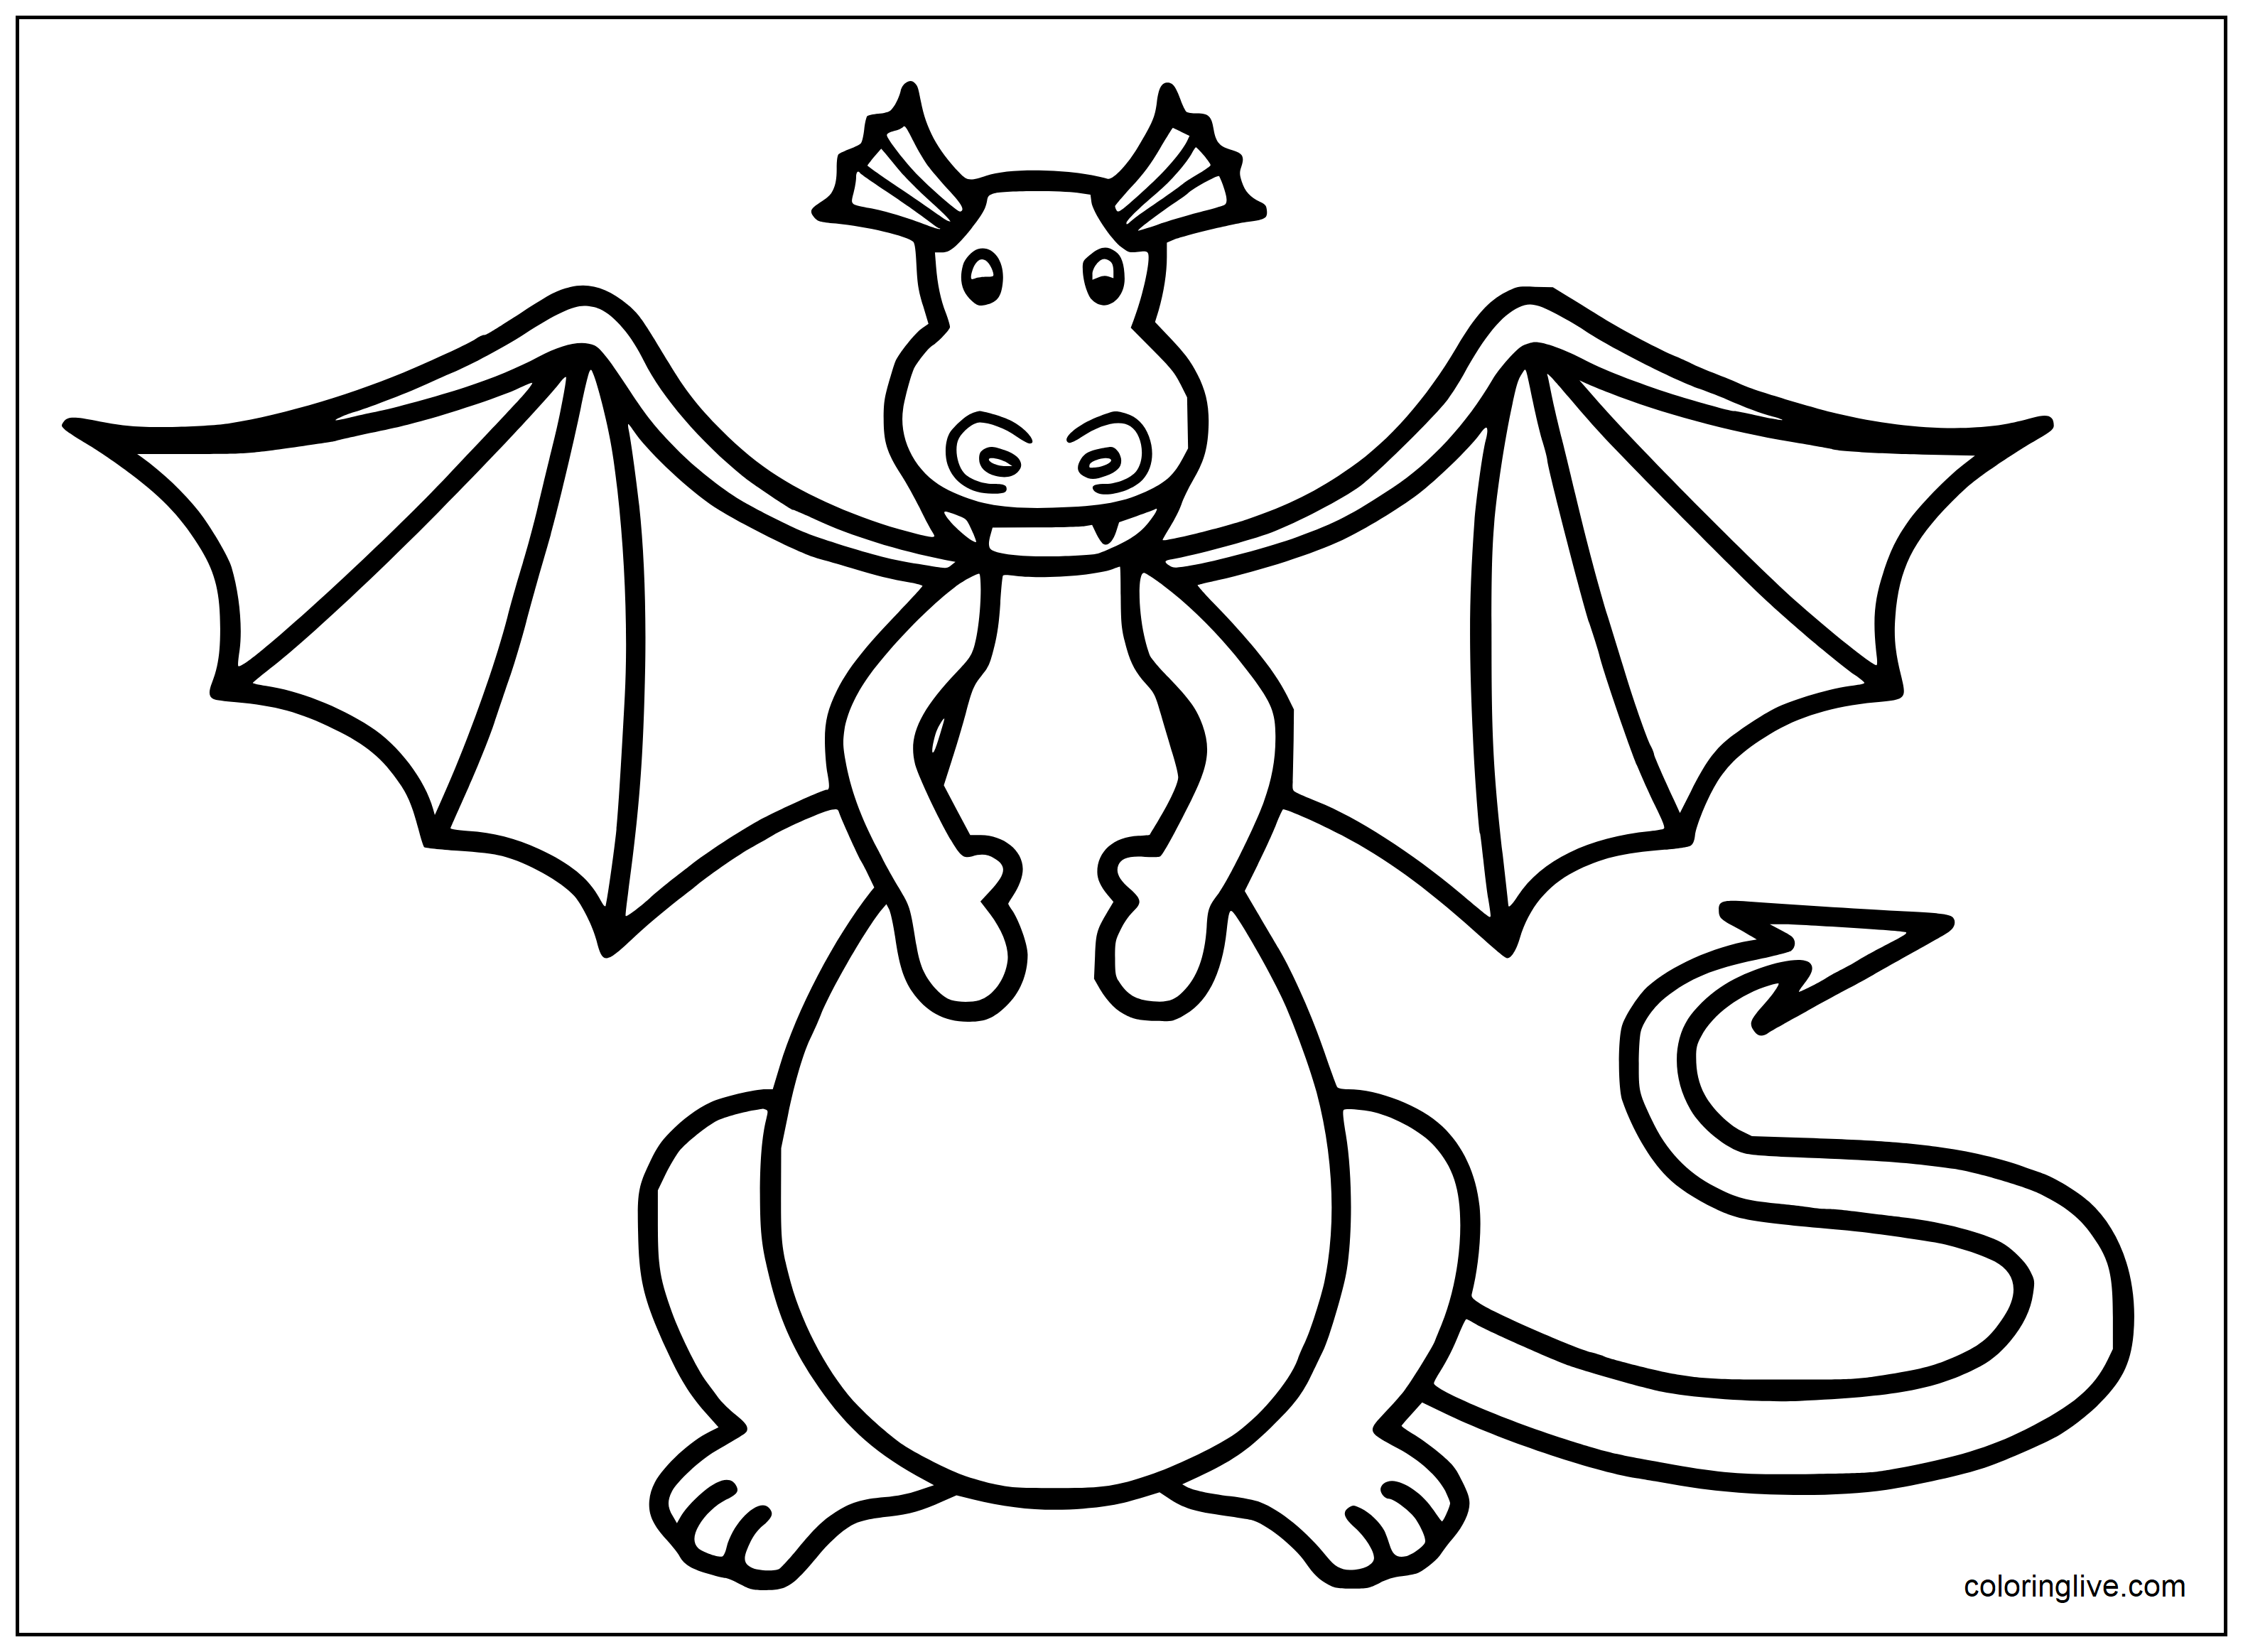 Printable Dragon like a cow Coloring Page for kids.